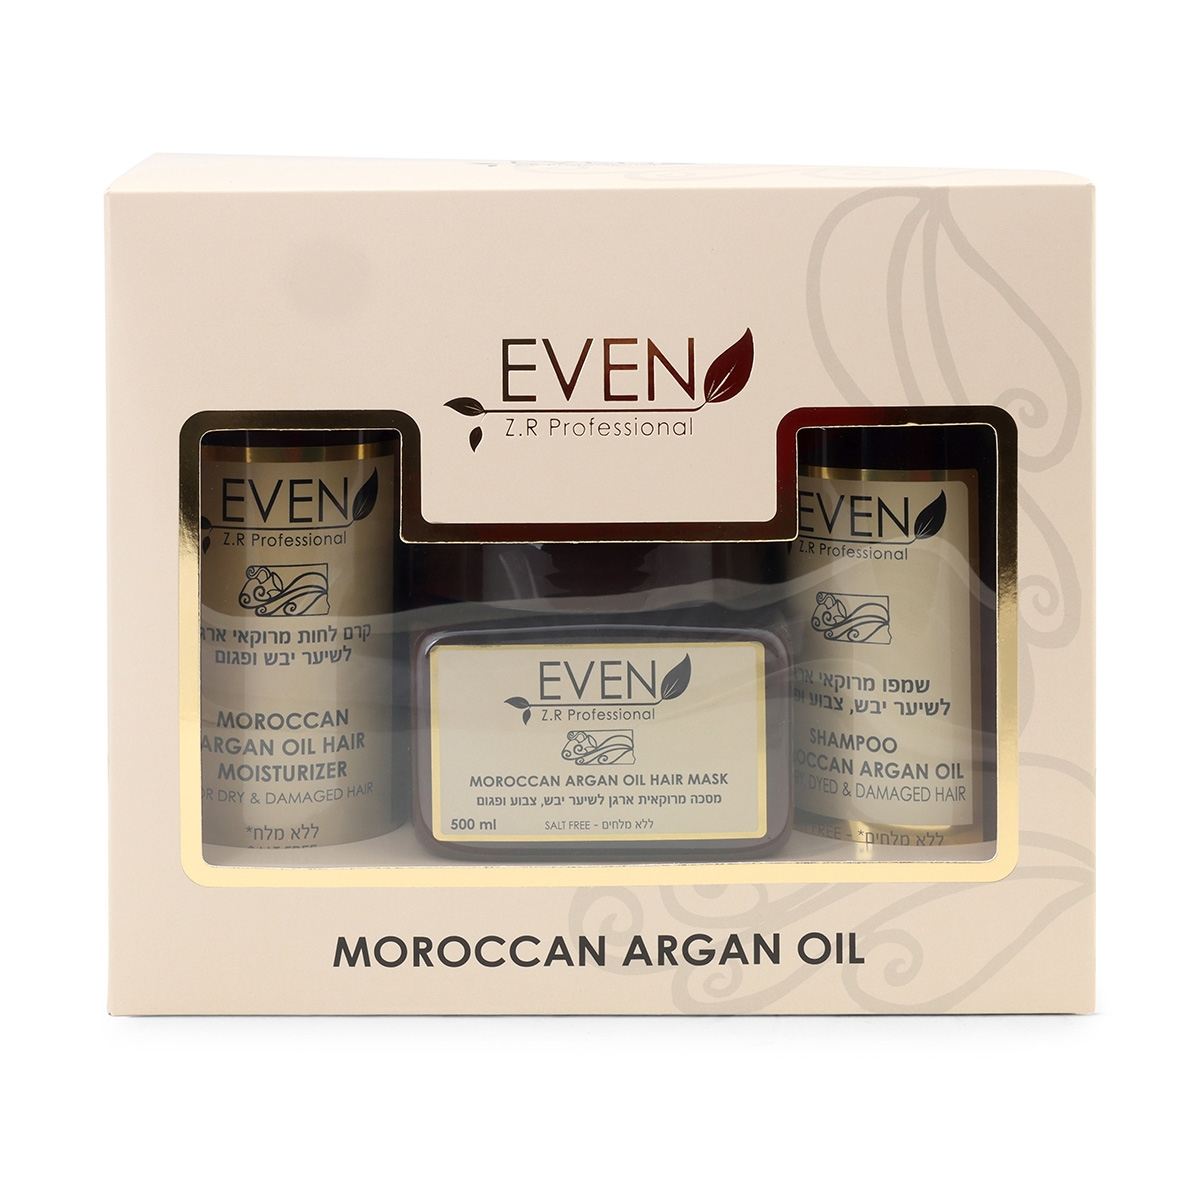 Even Moroccan Argan Oil Moisturizing Beauty Set for Dry/Damaged Hair - 1